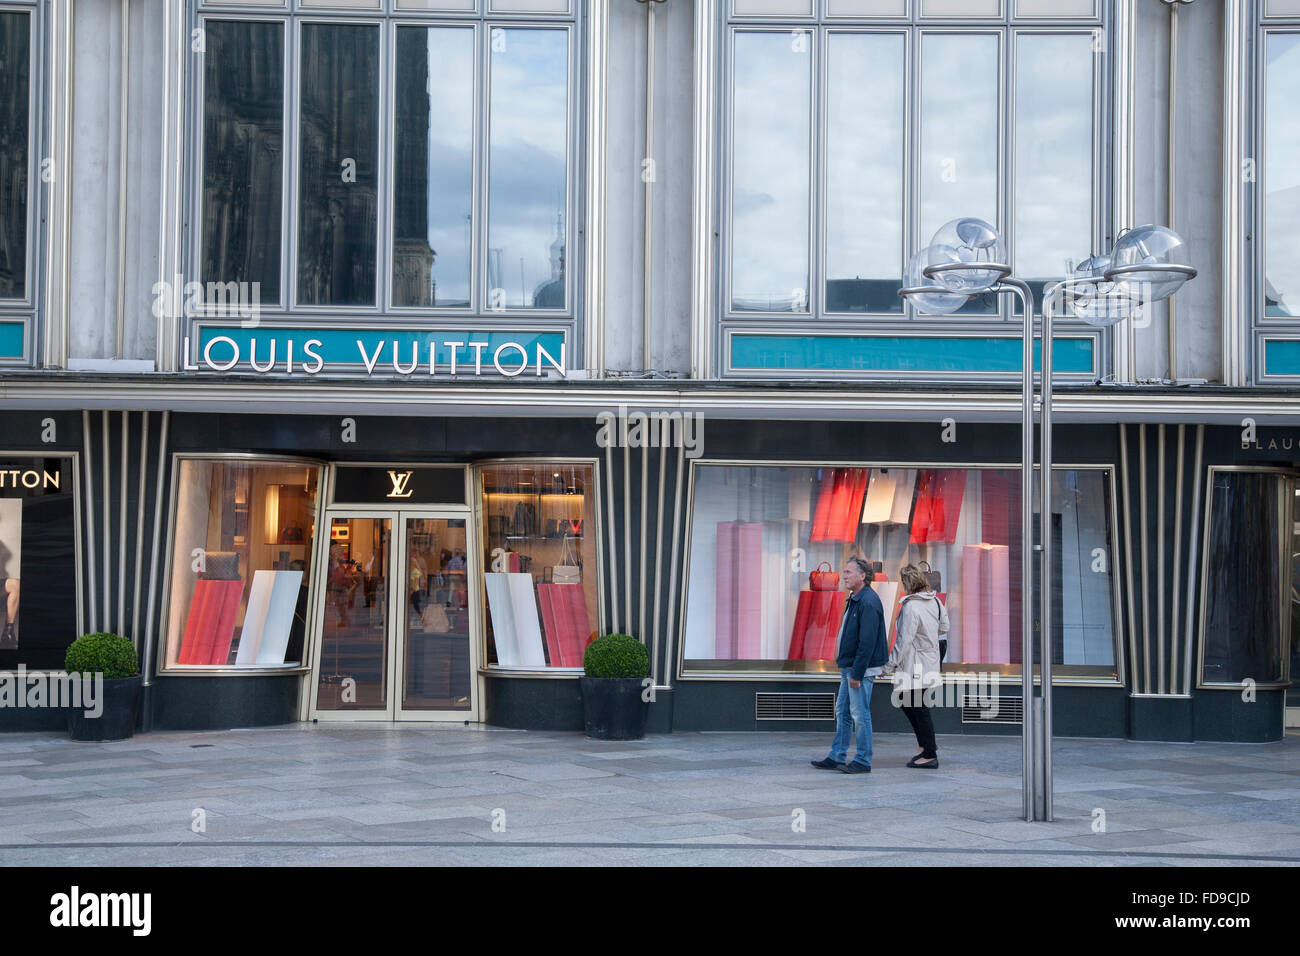 Louis Vuitton Shop, Cologne, Germany Stock Photo: 94249861 - Alamy